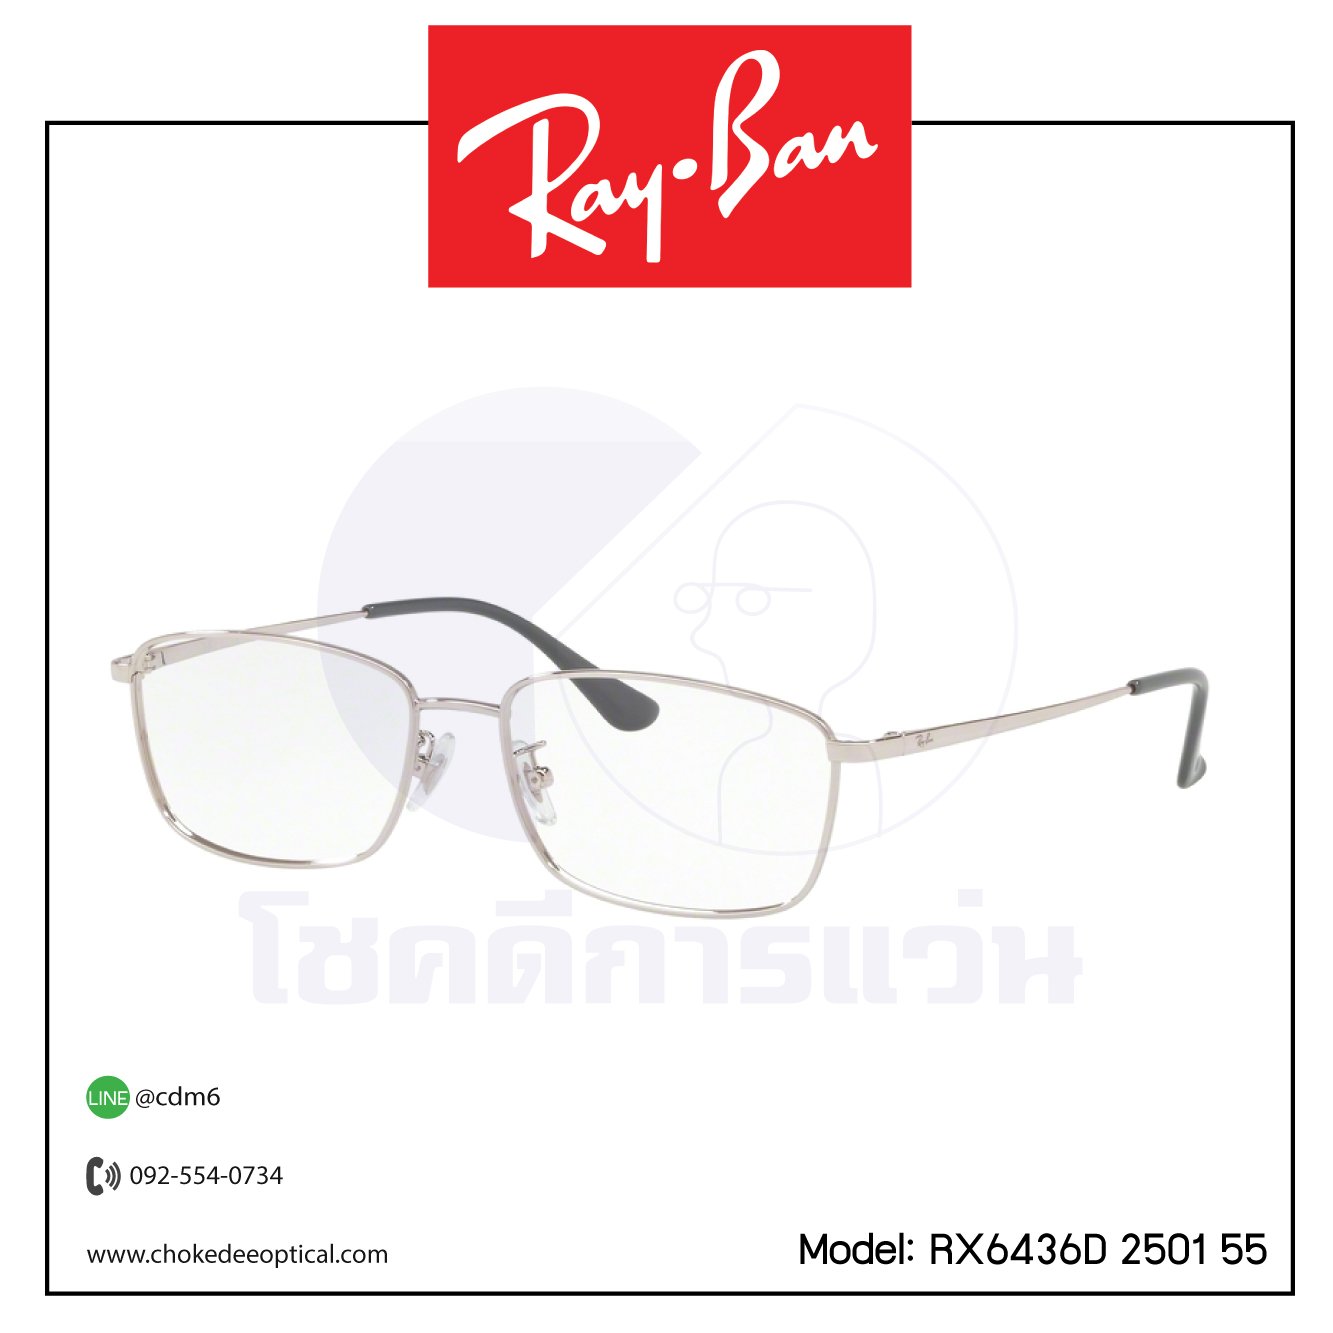 Rayban RX6436D 2501 55